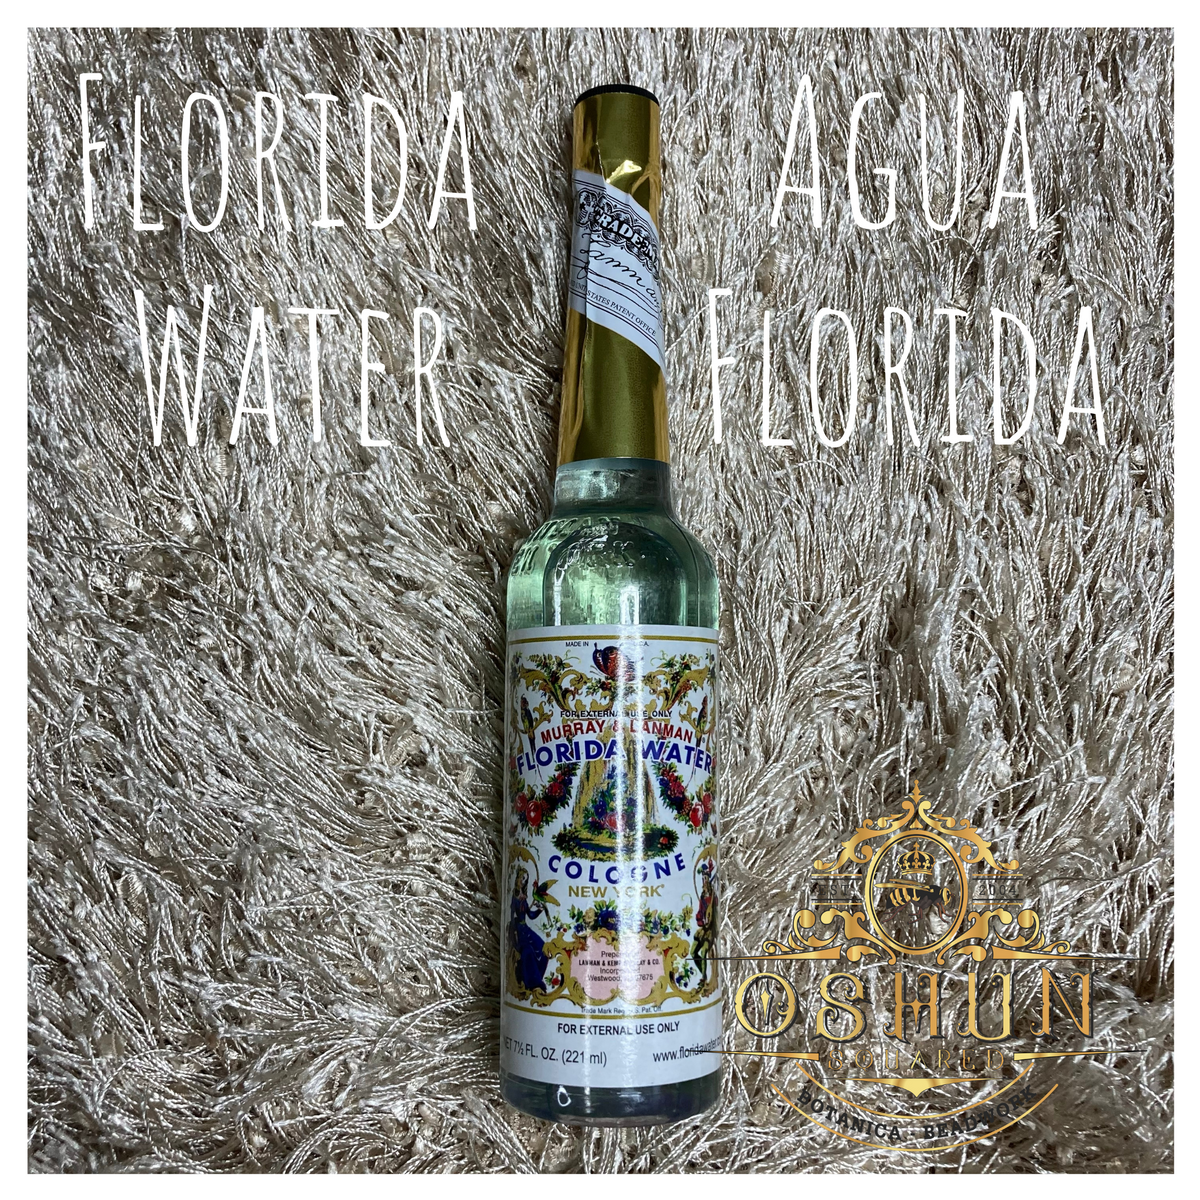 Colonia Florida Original- Agua de flores,Colonia Florida espiritual Pura y  Jabón - Florida Original Cubano, water y Jabón Florida- Agua de Flores